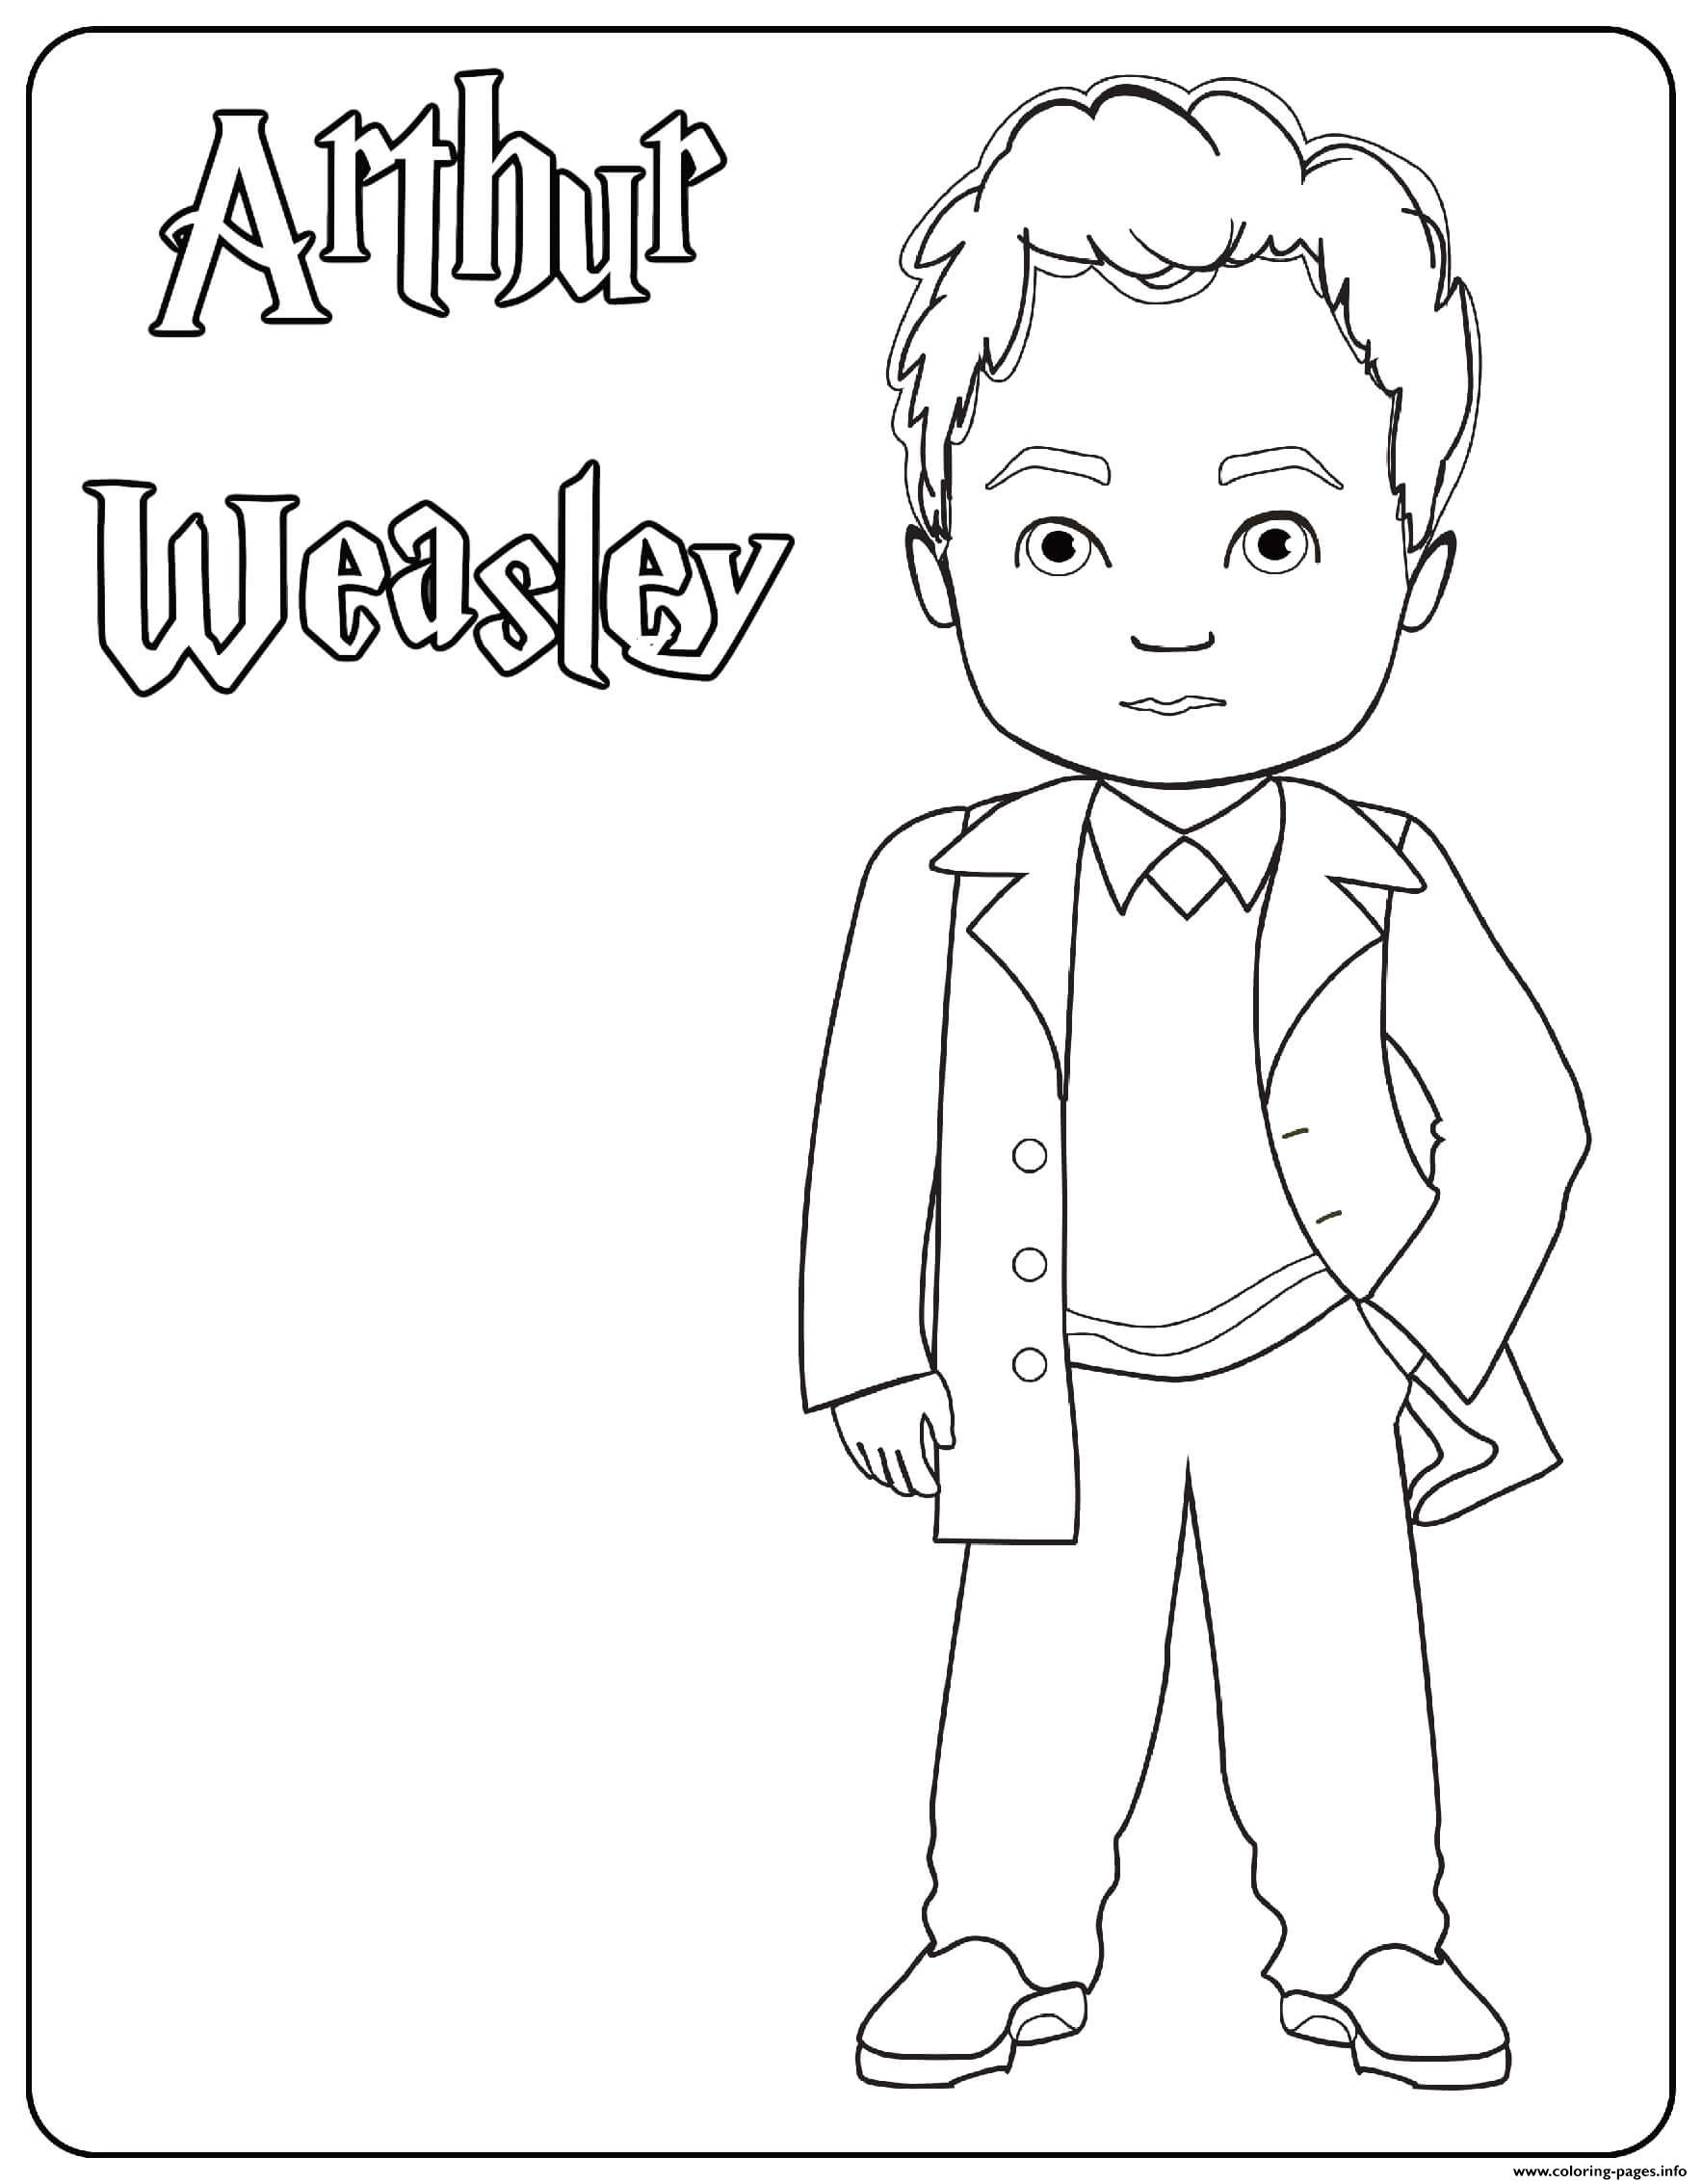 Arthur Weasley coloring